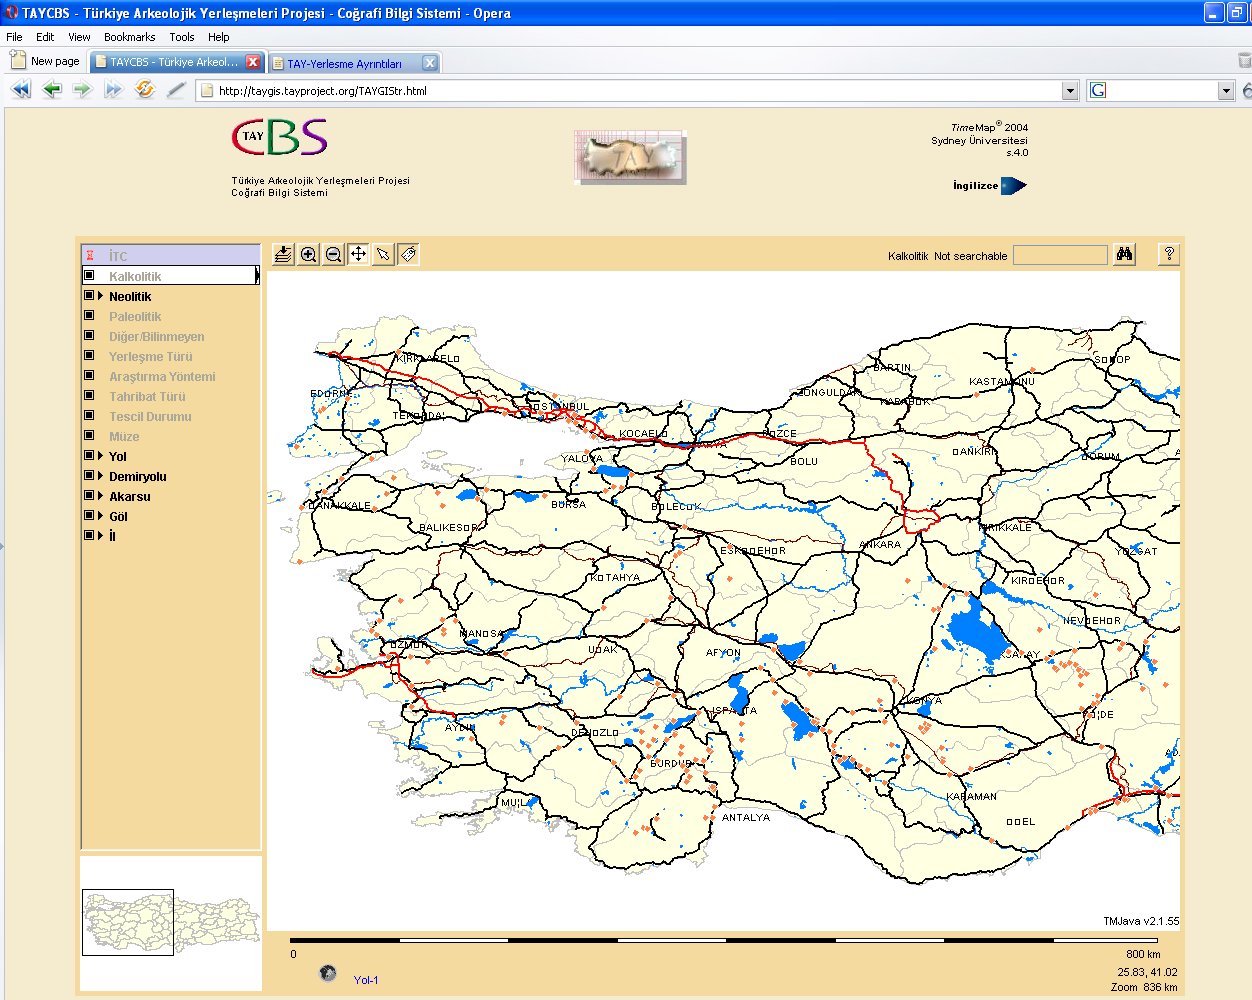 GIS map of Turkey